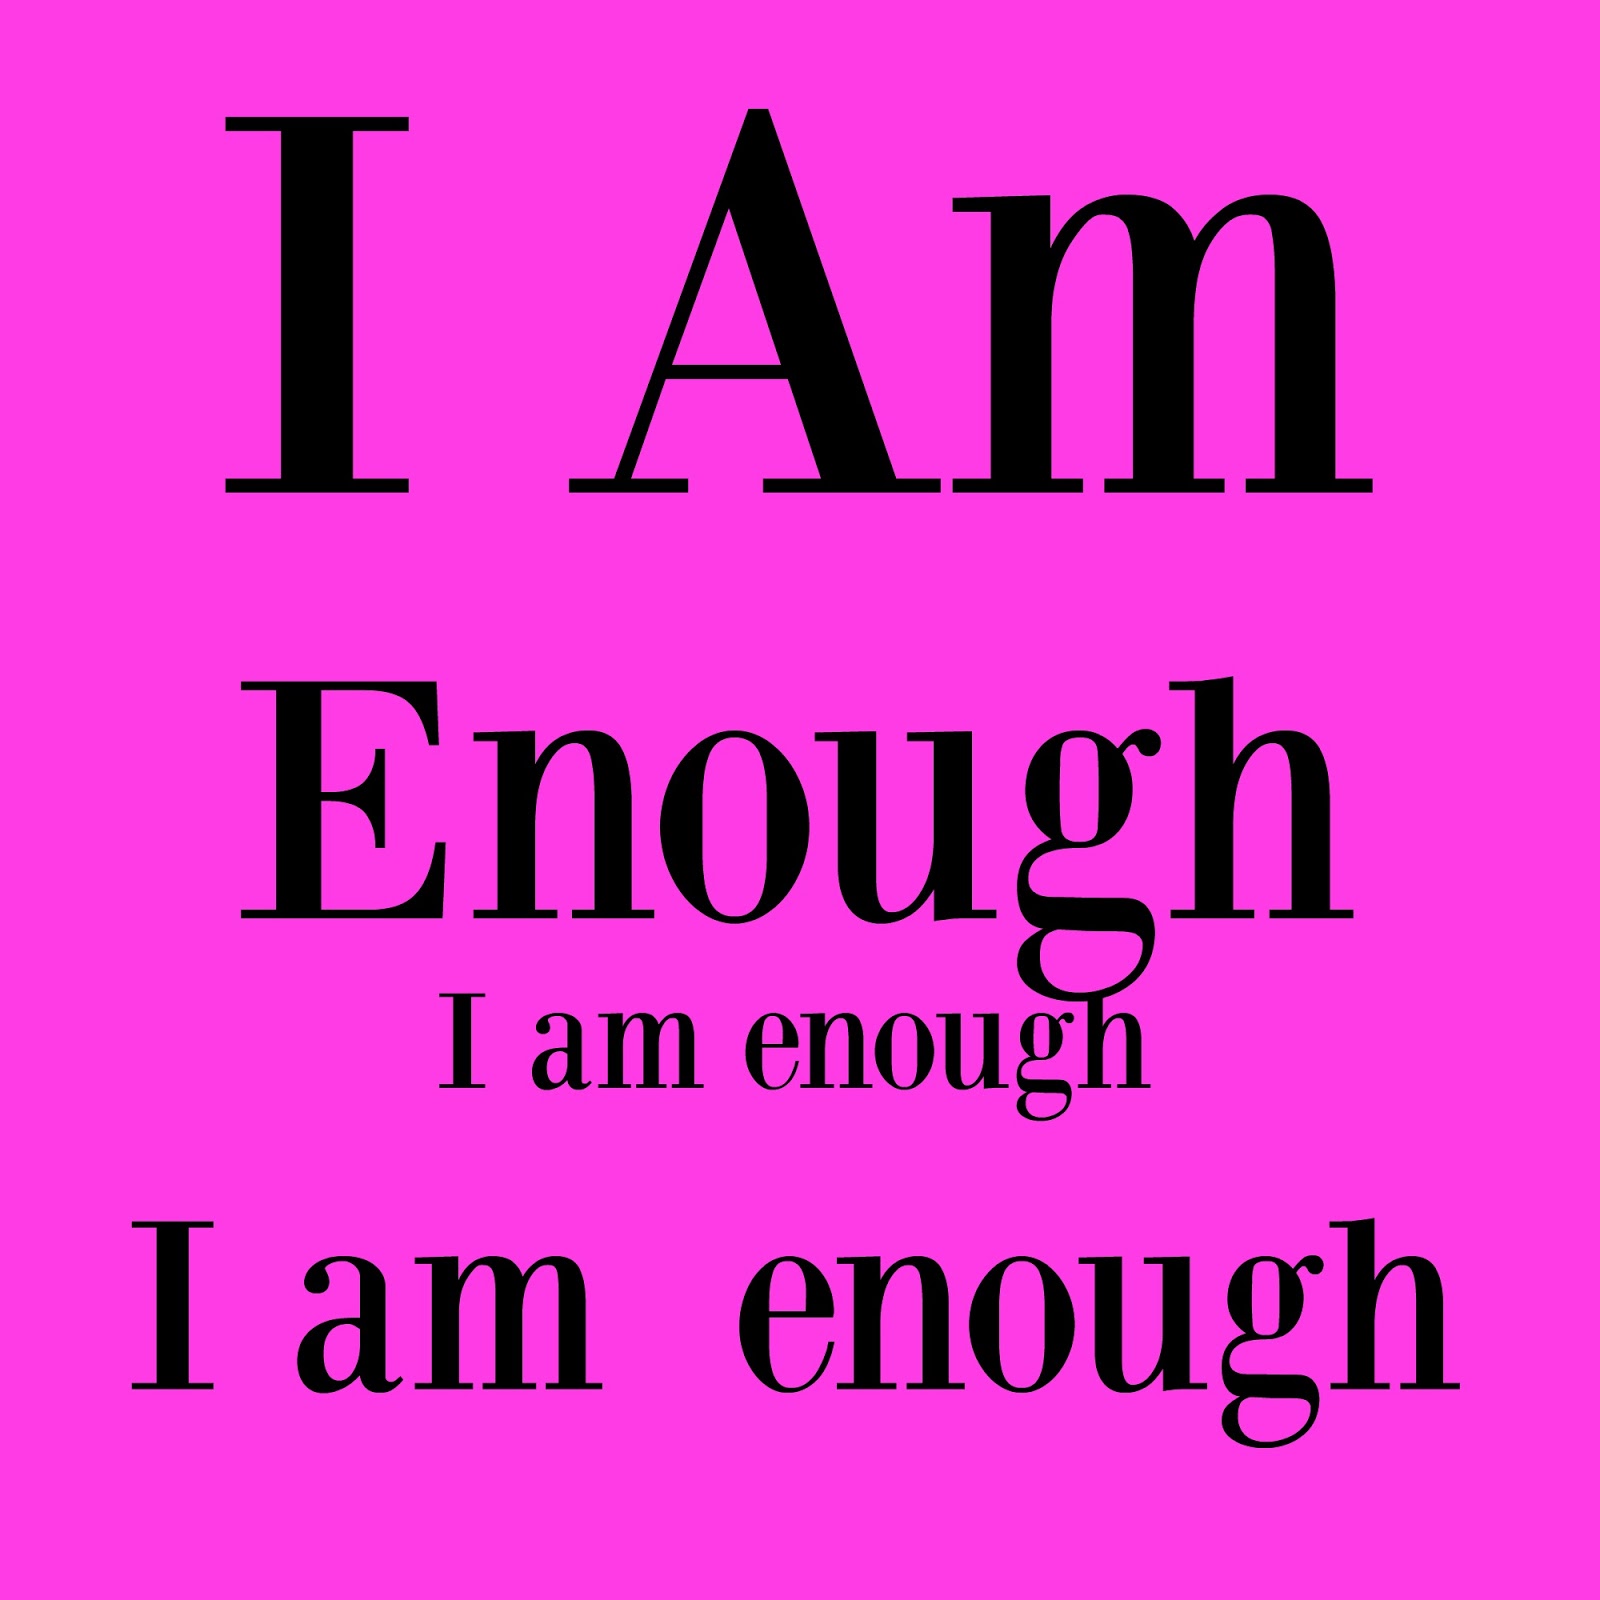 I am enough. I am enough Affirmations. L am enough